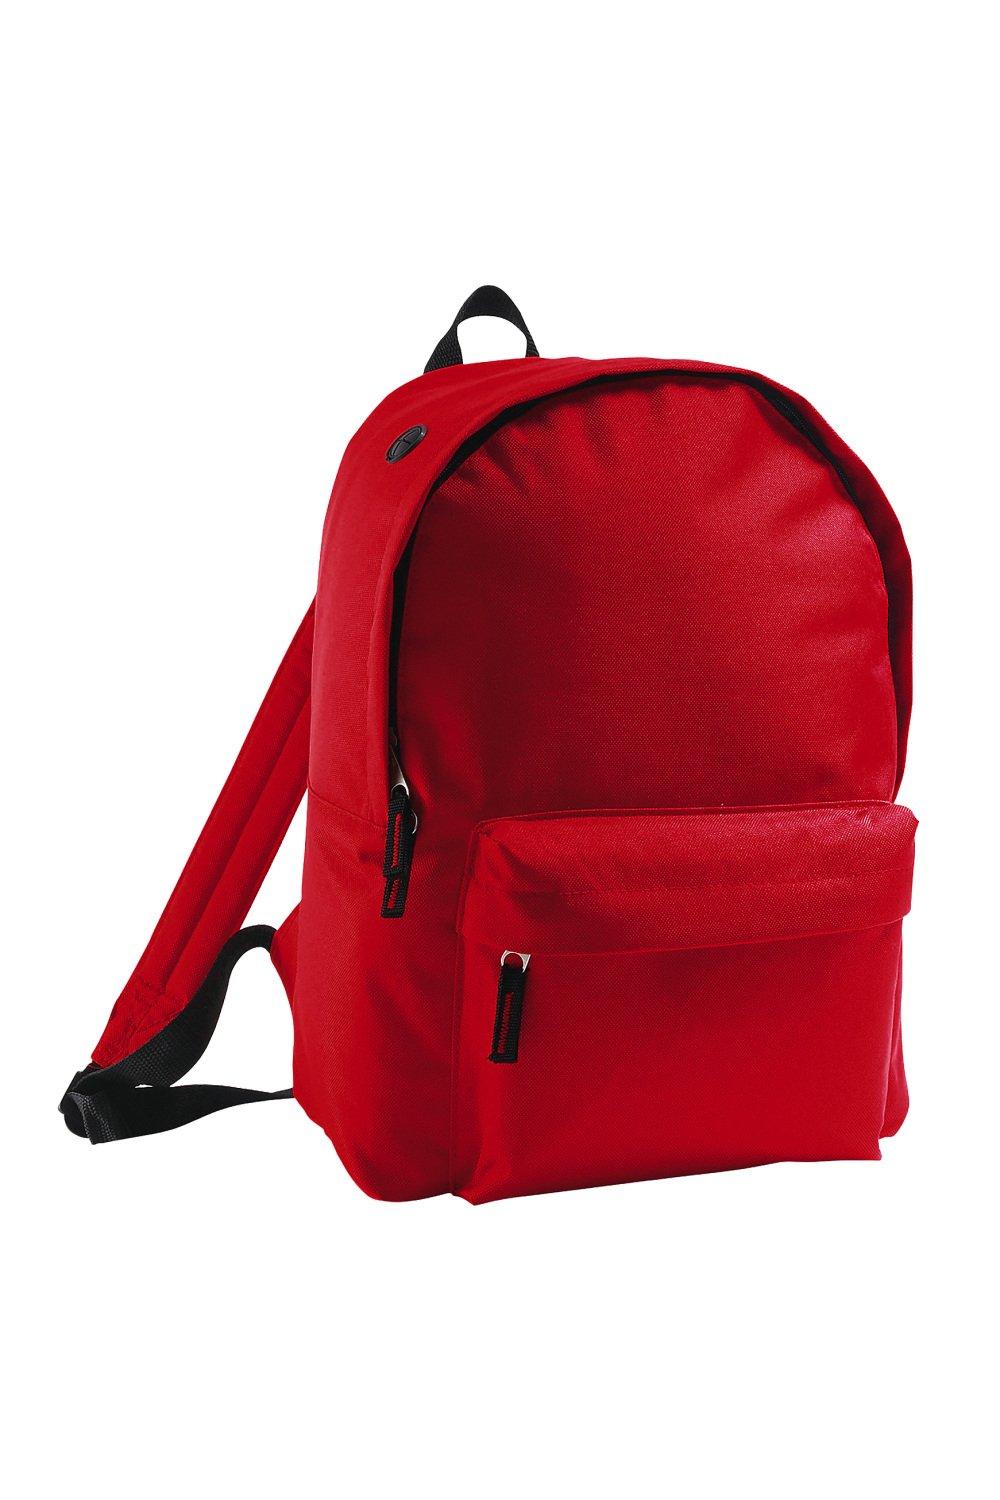 Рюкзак / сумка-рюкзак Rider SOL'S, красный рюкзак rider красный